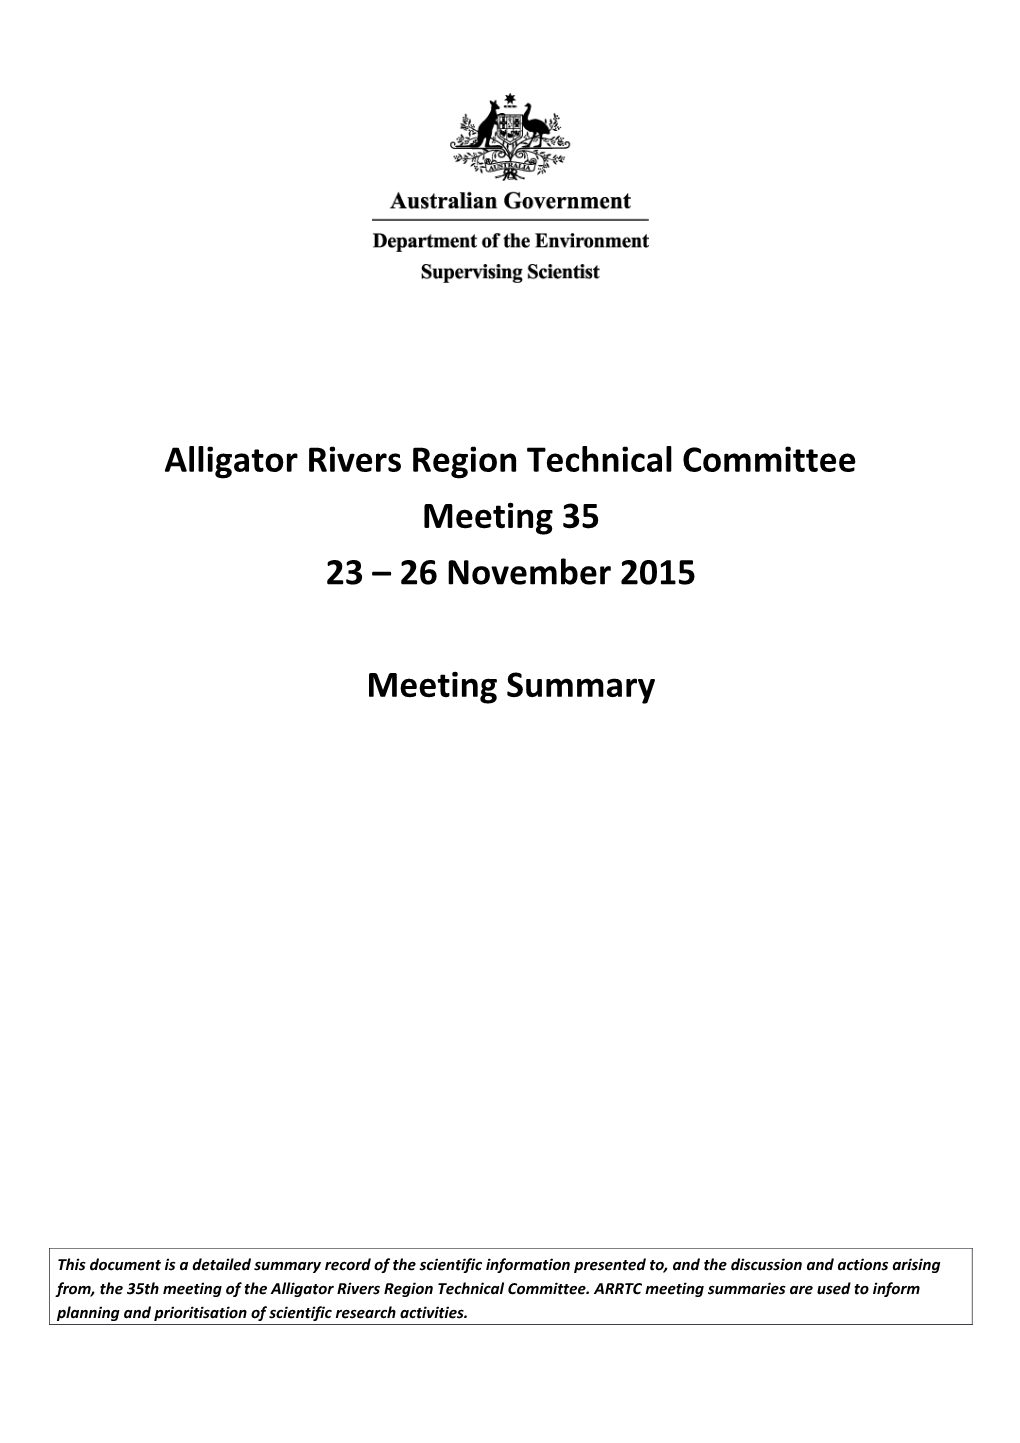 ARRTC 35 Meeting Summary